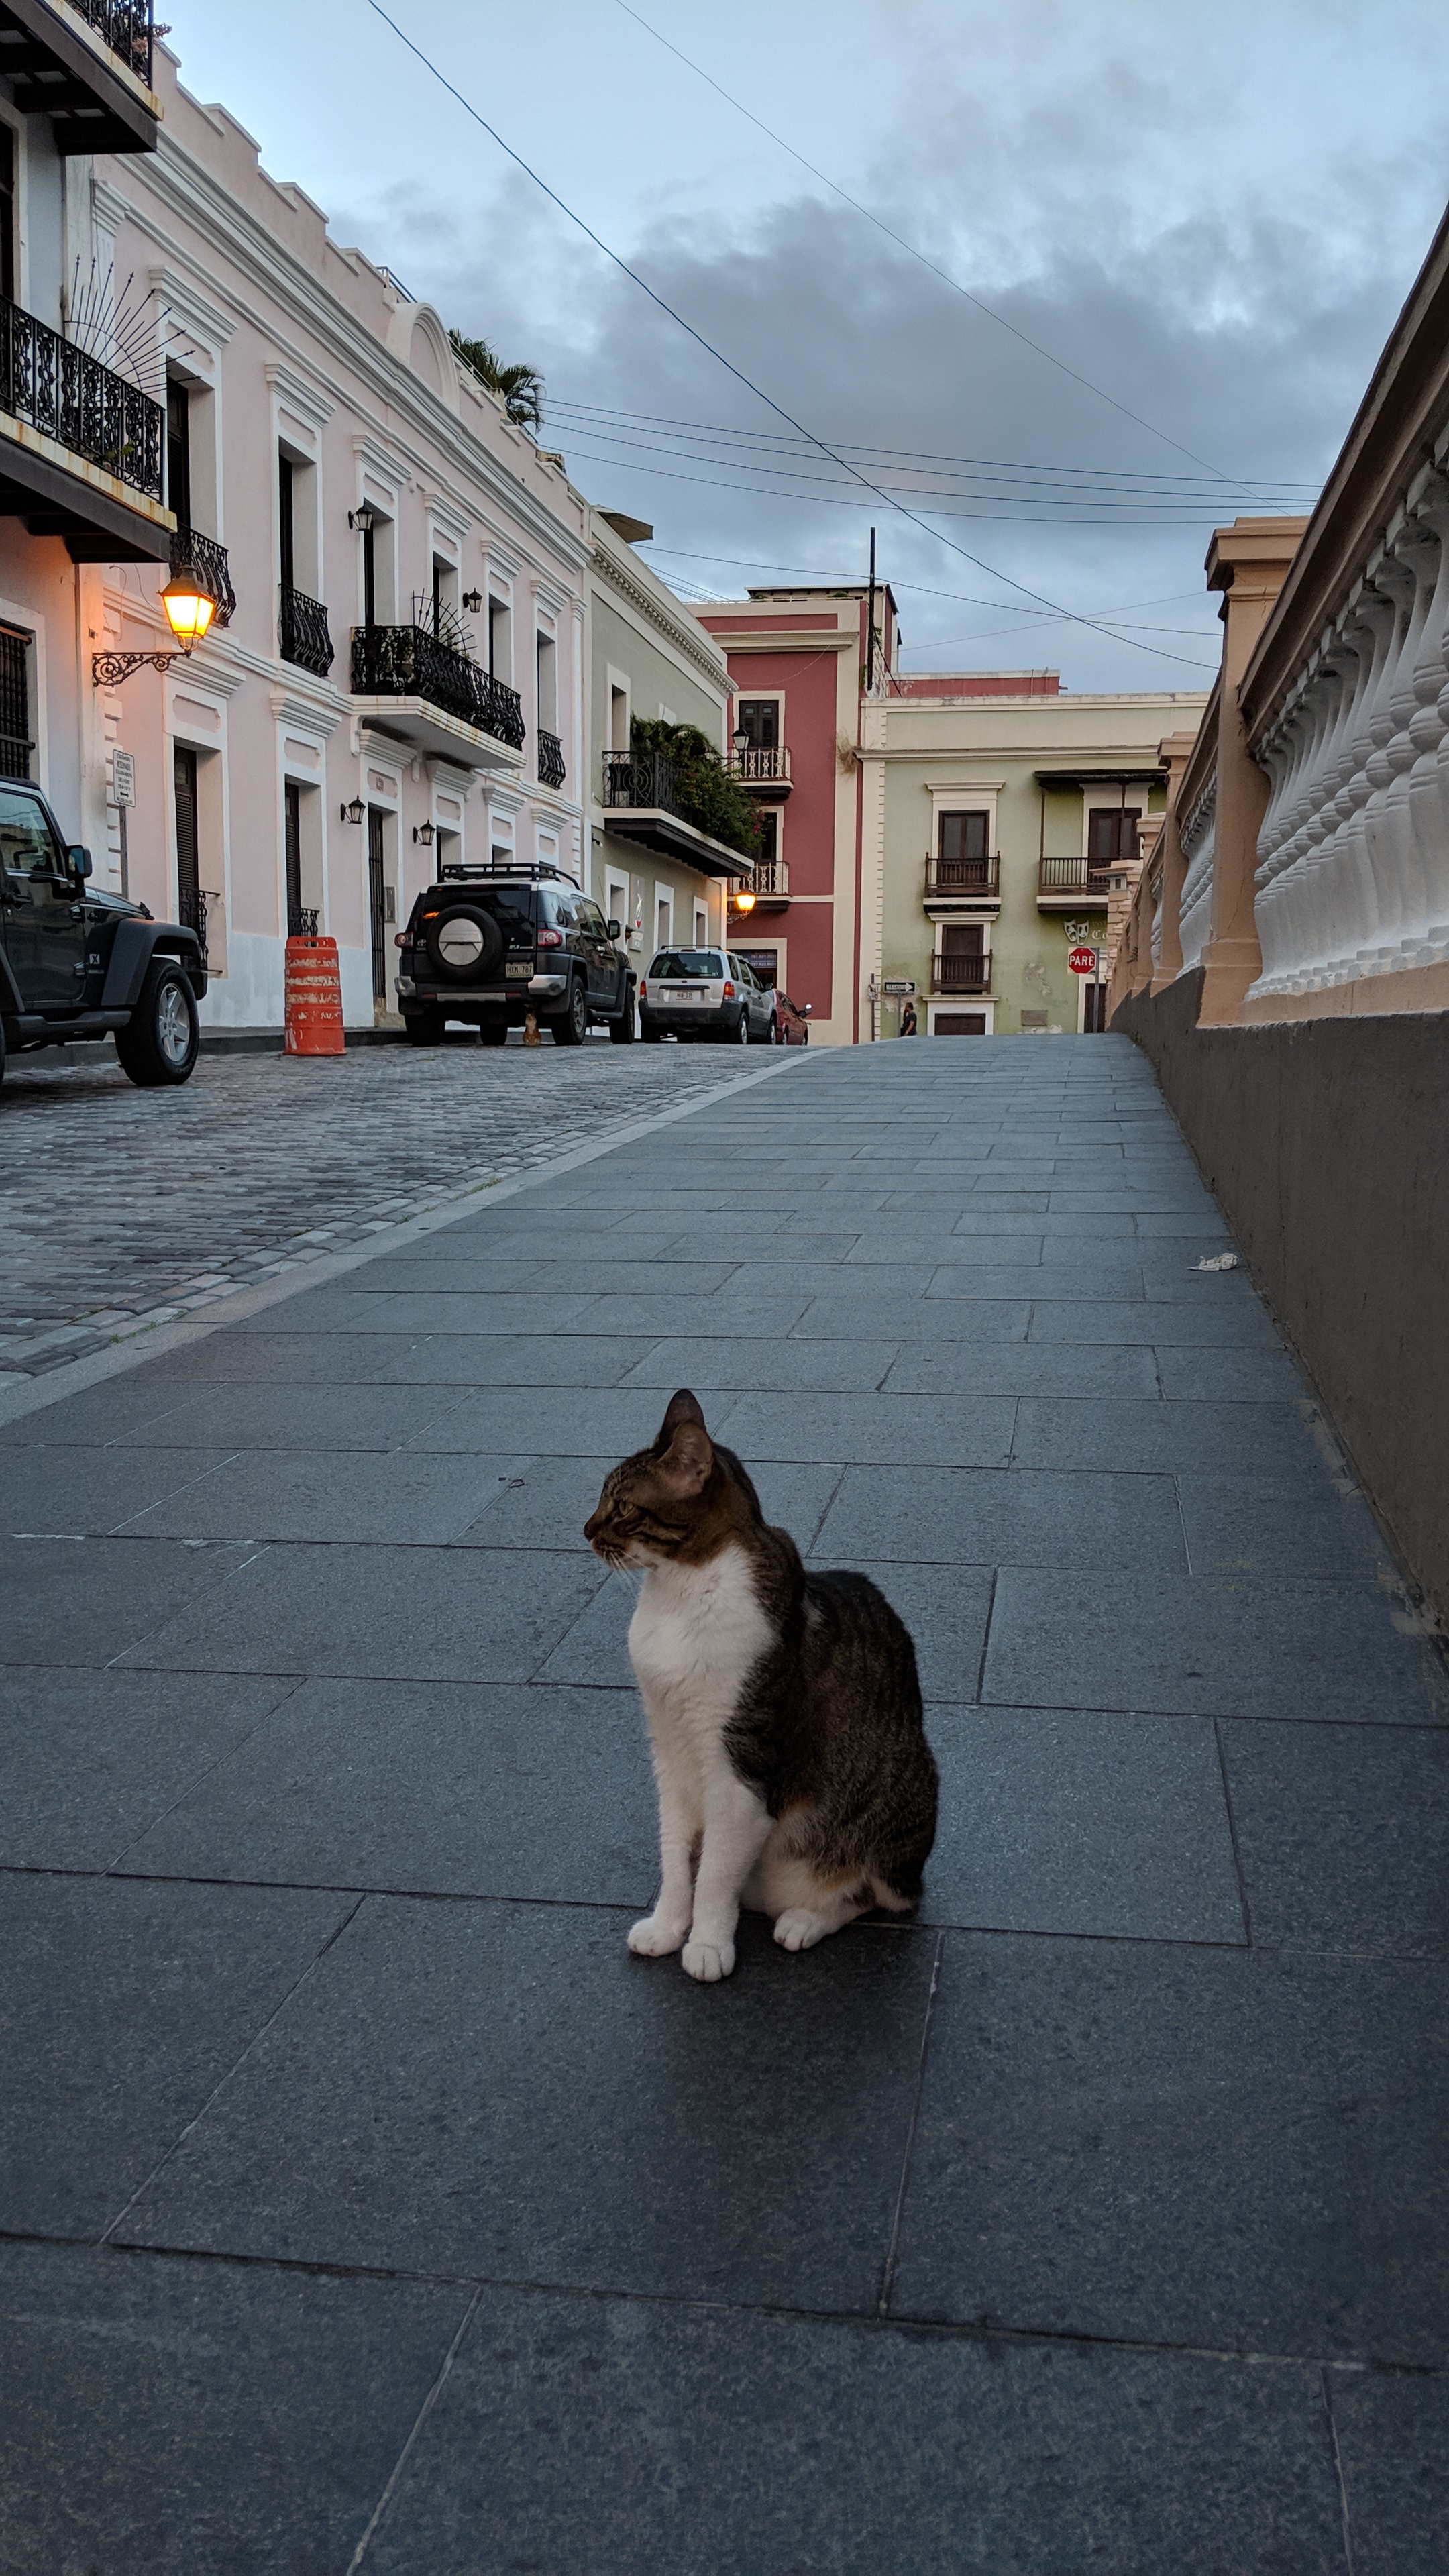 Beirut Cat Café - Rest in peace, Grumpy Cat 😿 This cutie